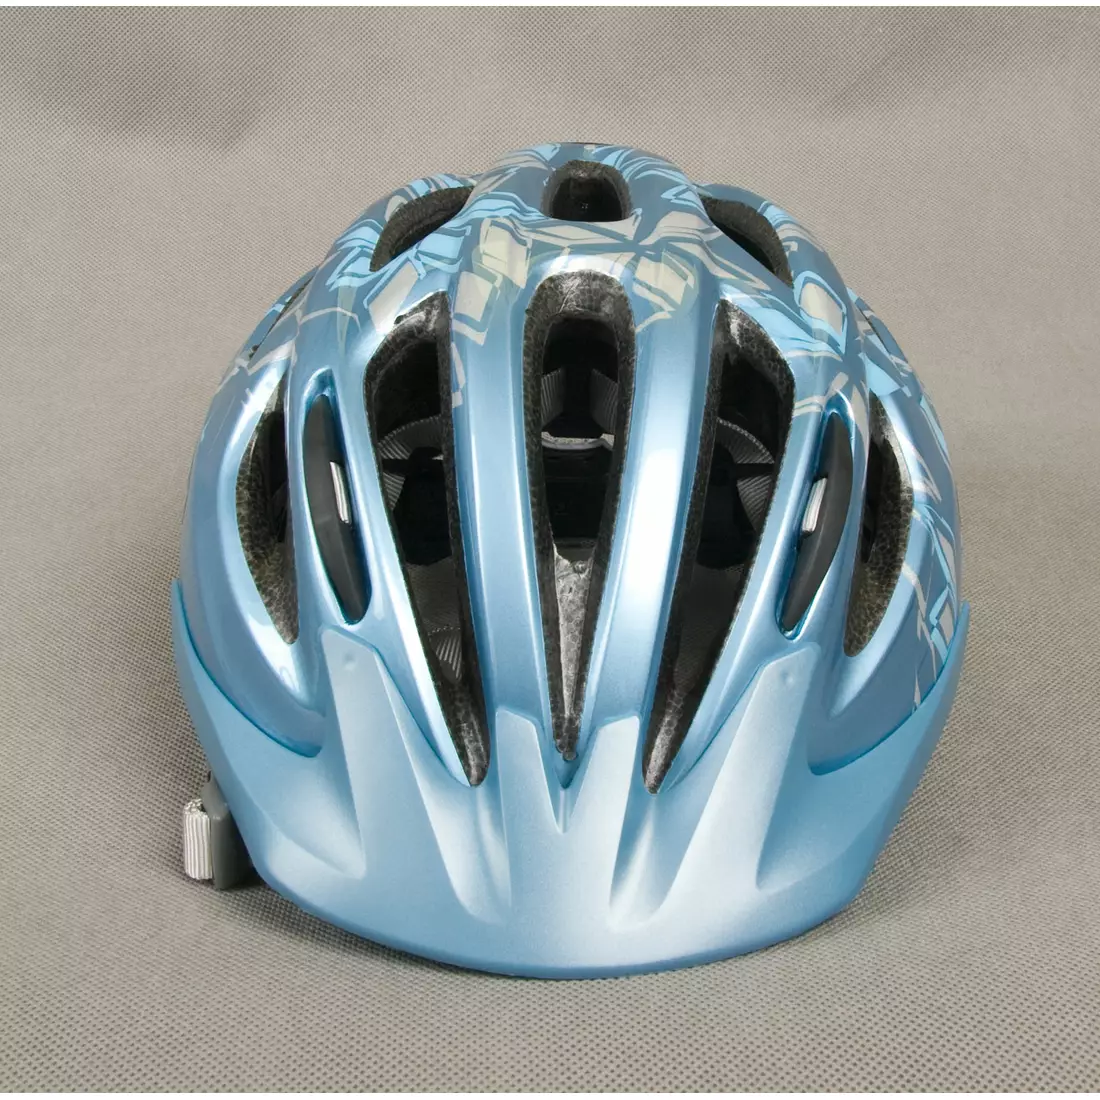 Dámská cyklistická přilba GIRO VENUS II, barva: Modrá a bílá